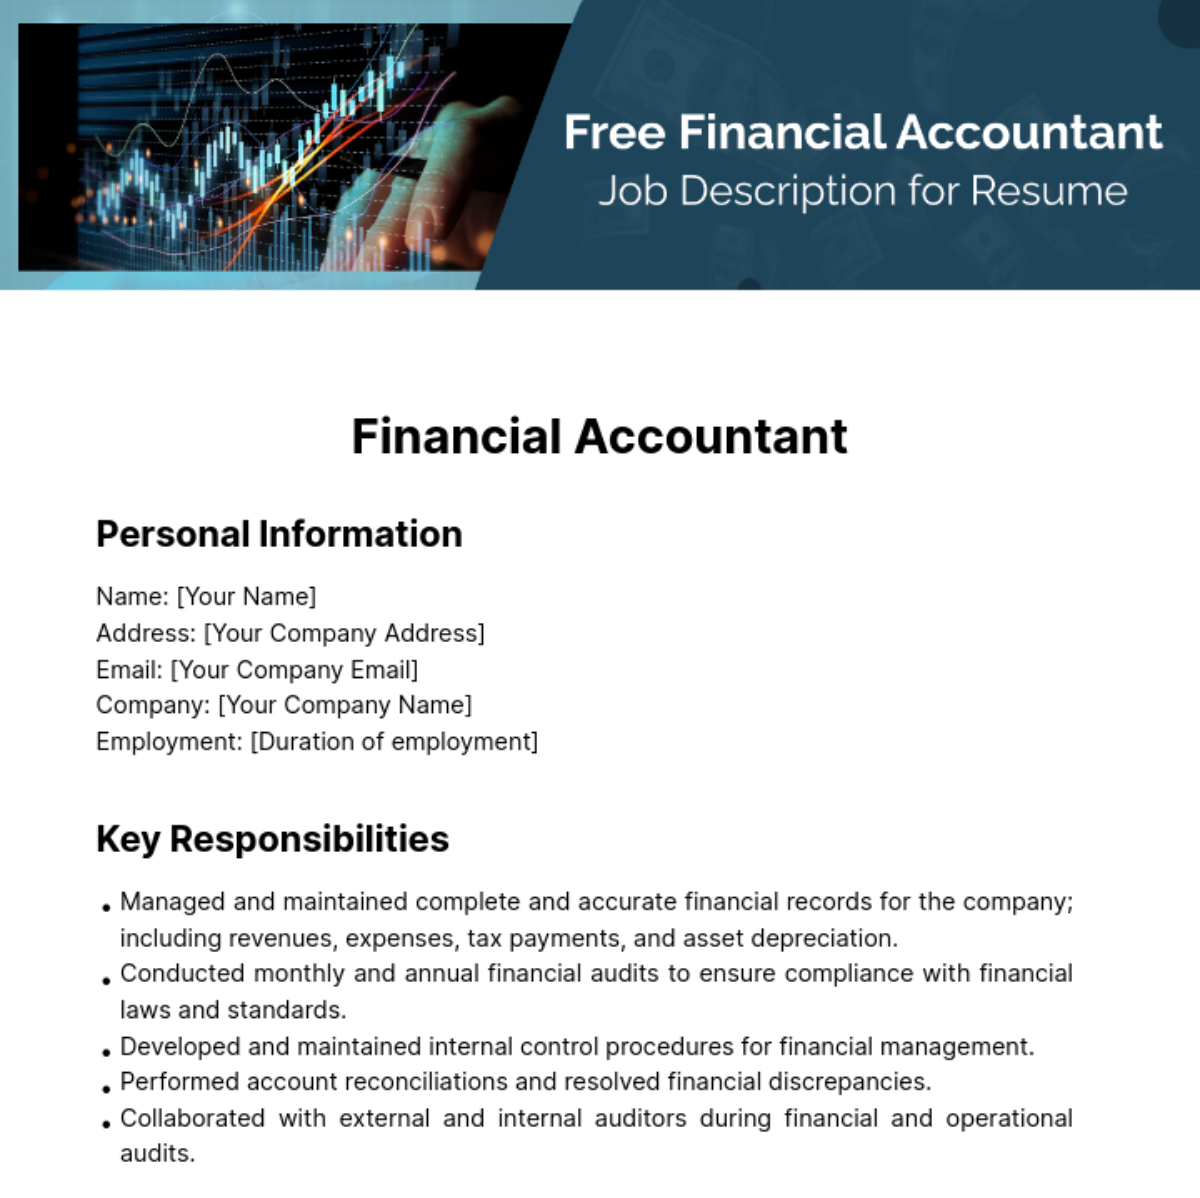 Free Financial Accountant Job Description for Resume Template